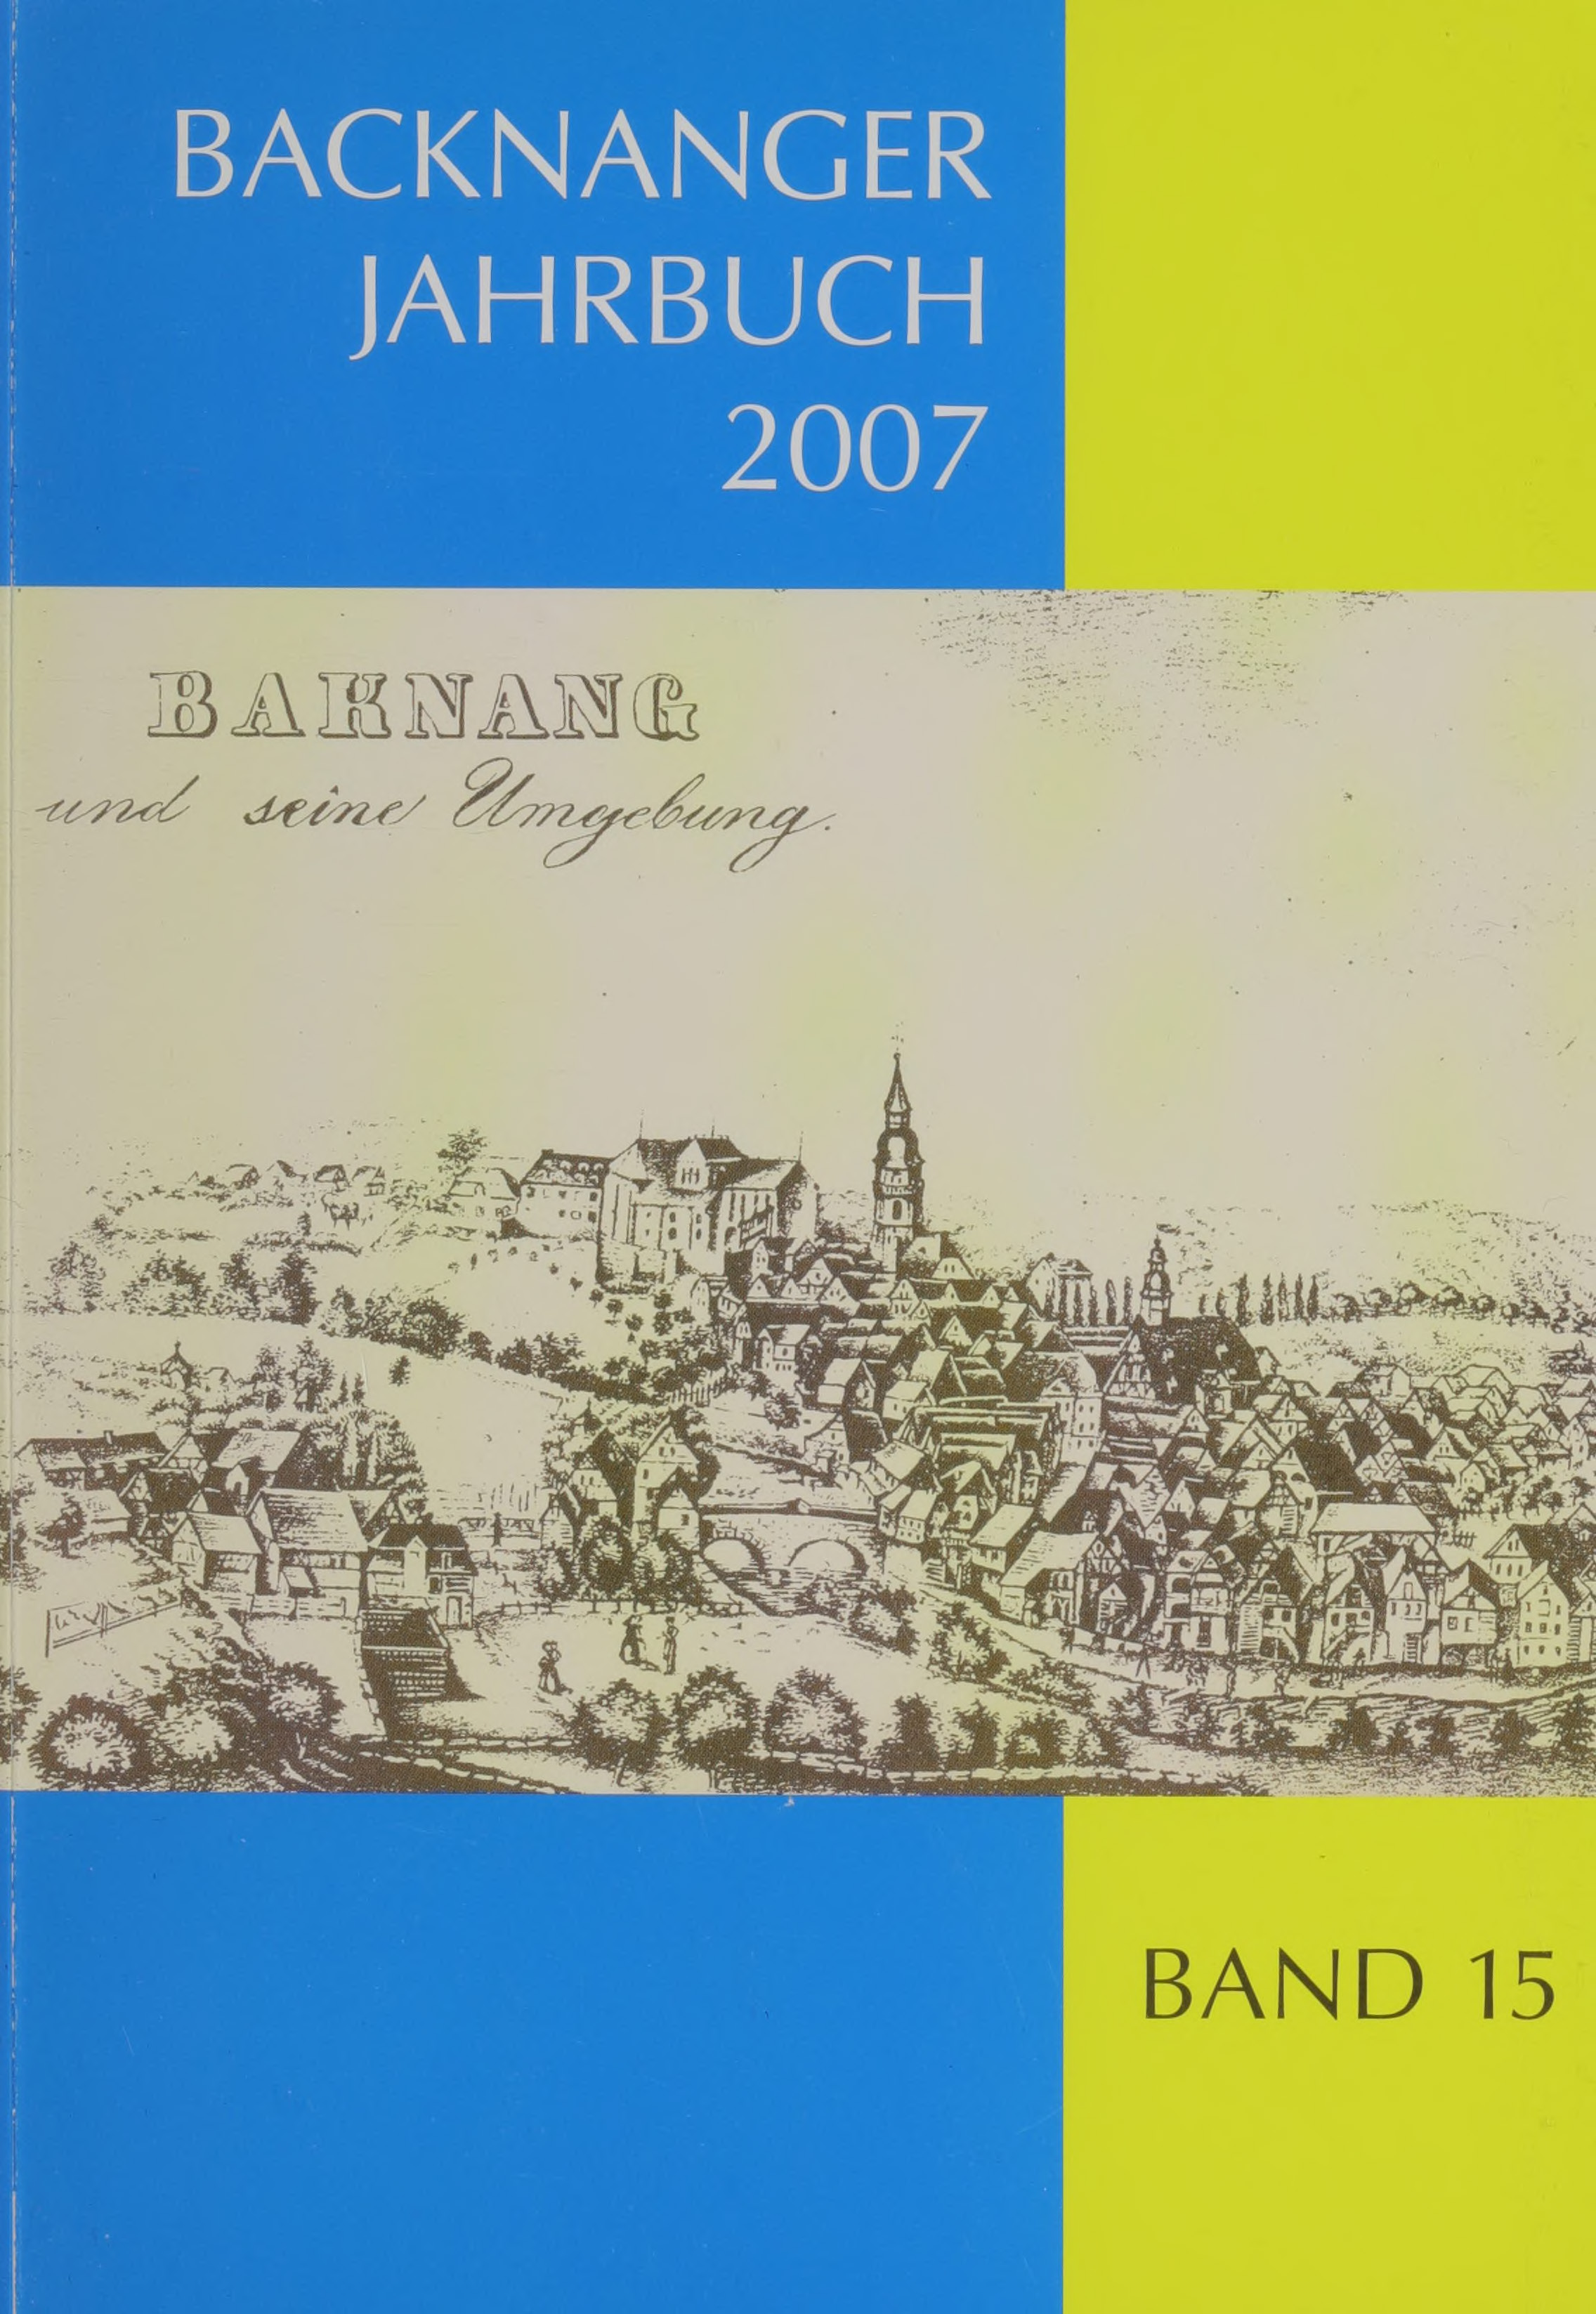                     Ansehen Bd. 15 (2007): Backnanger Jahrbuch
                